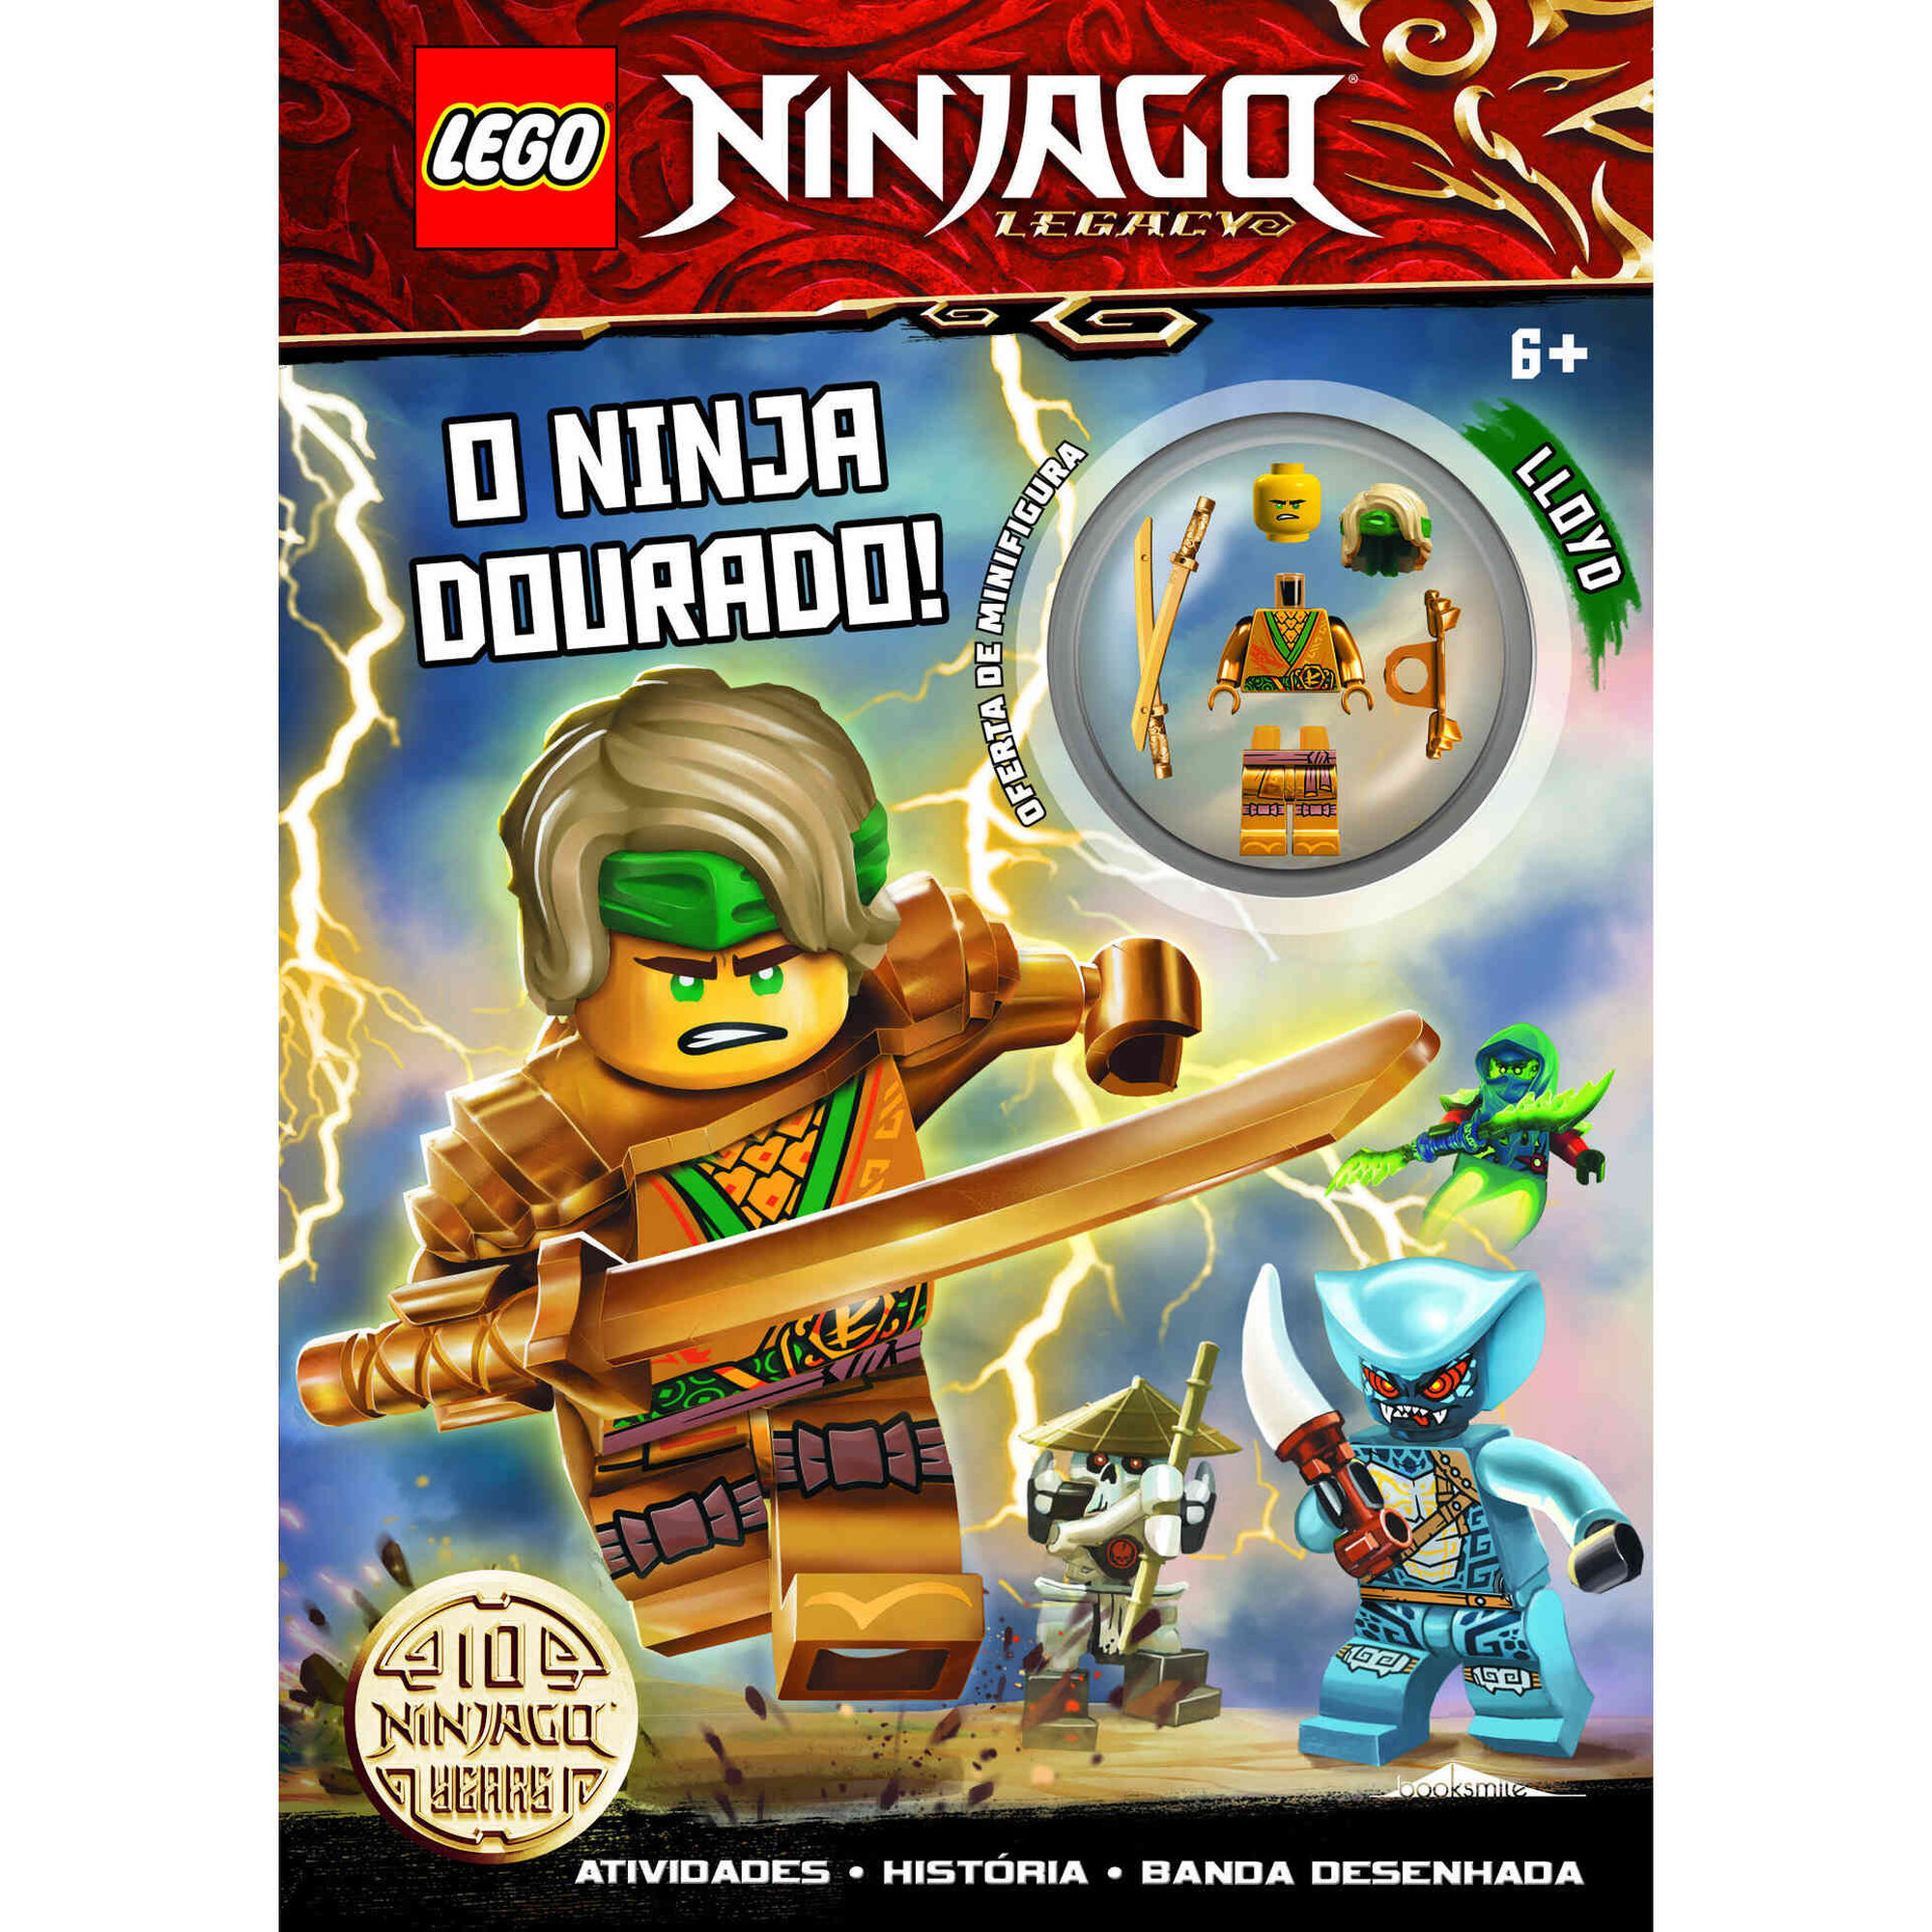 LEGO Ninjago - O Ninja Dourado!